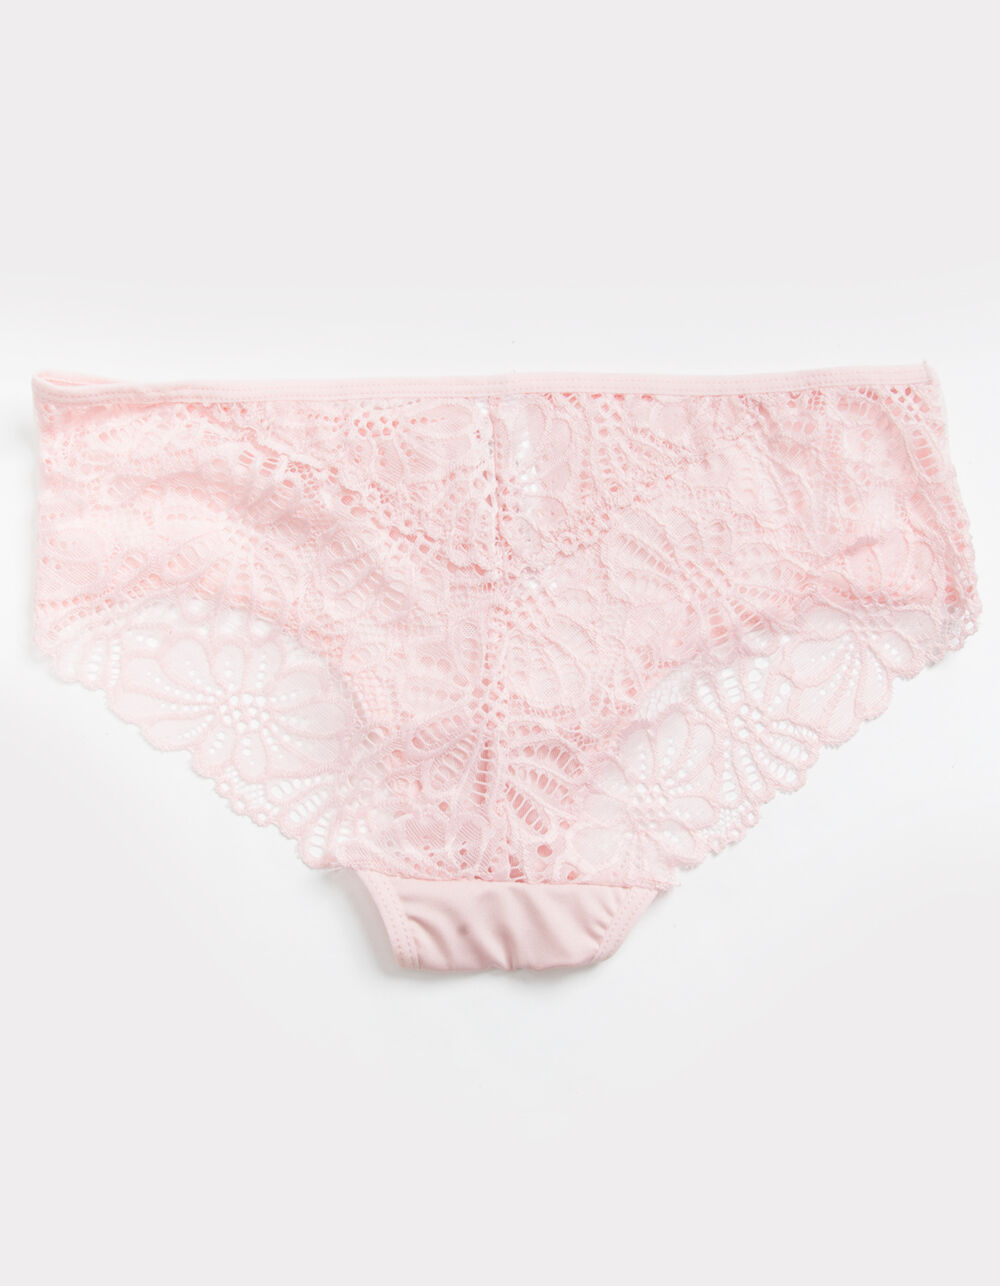 FULL TILT All Over Lace Light Pink Bikini Panties - LIGHT PINK